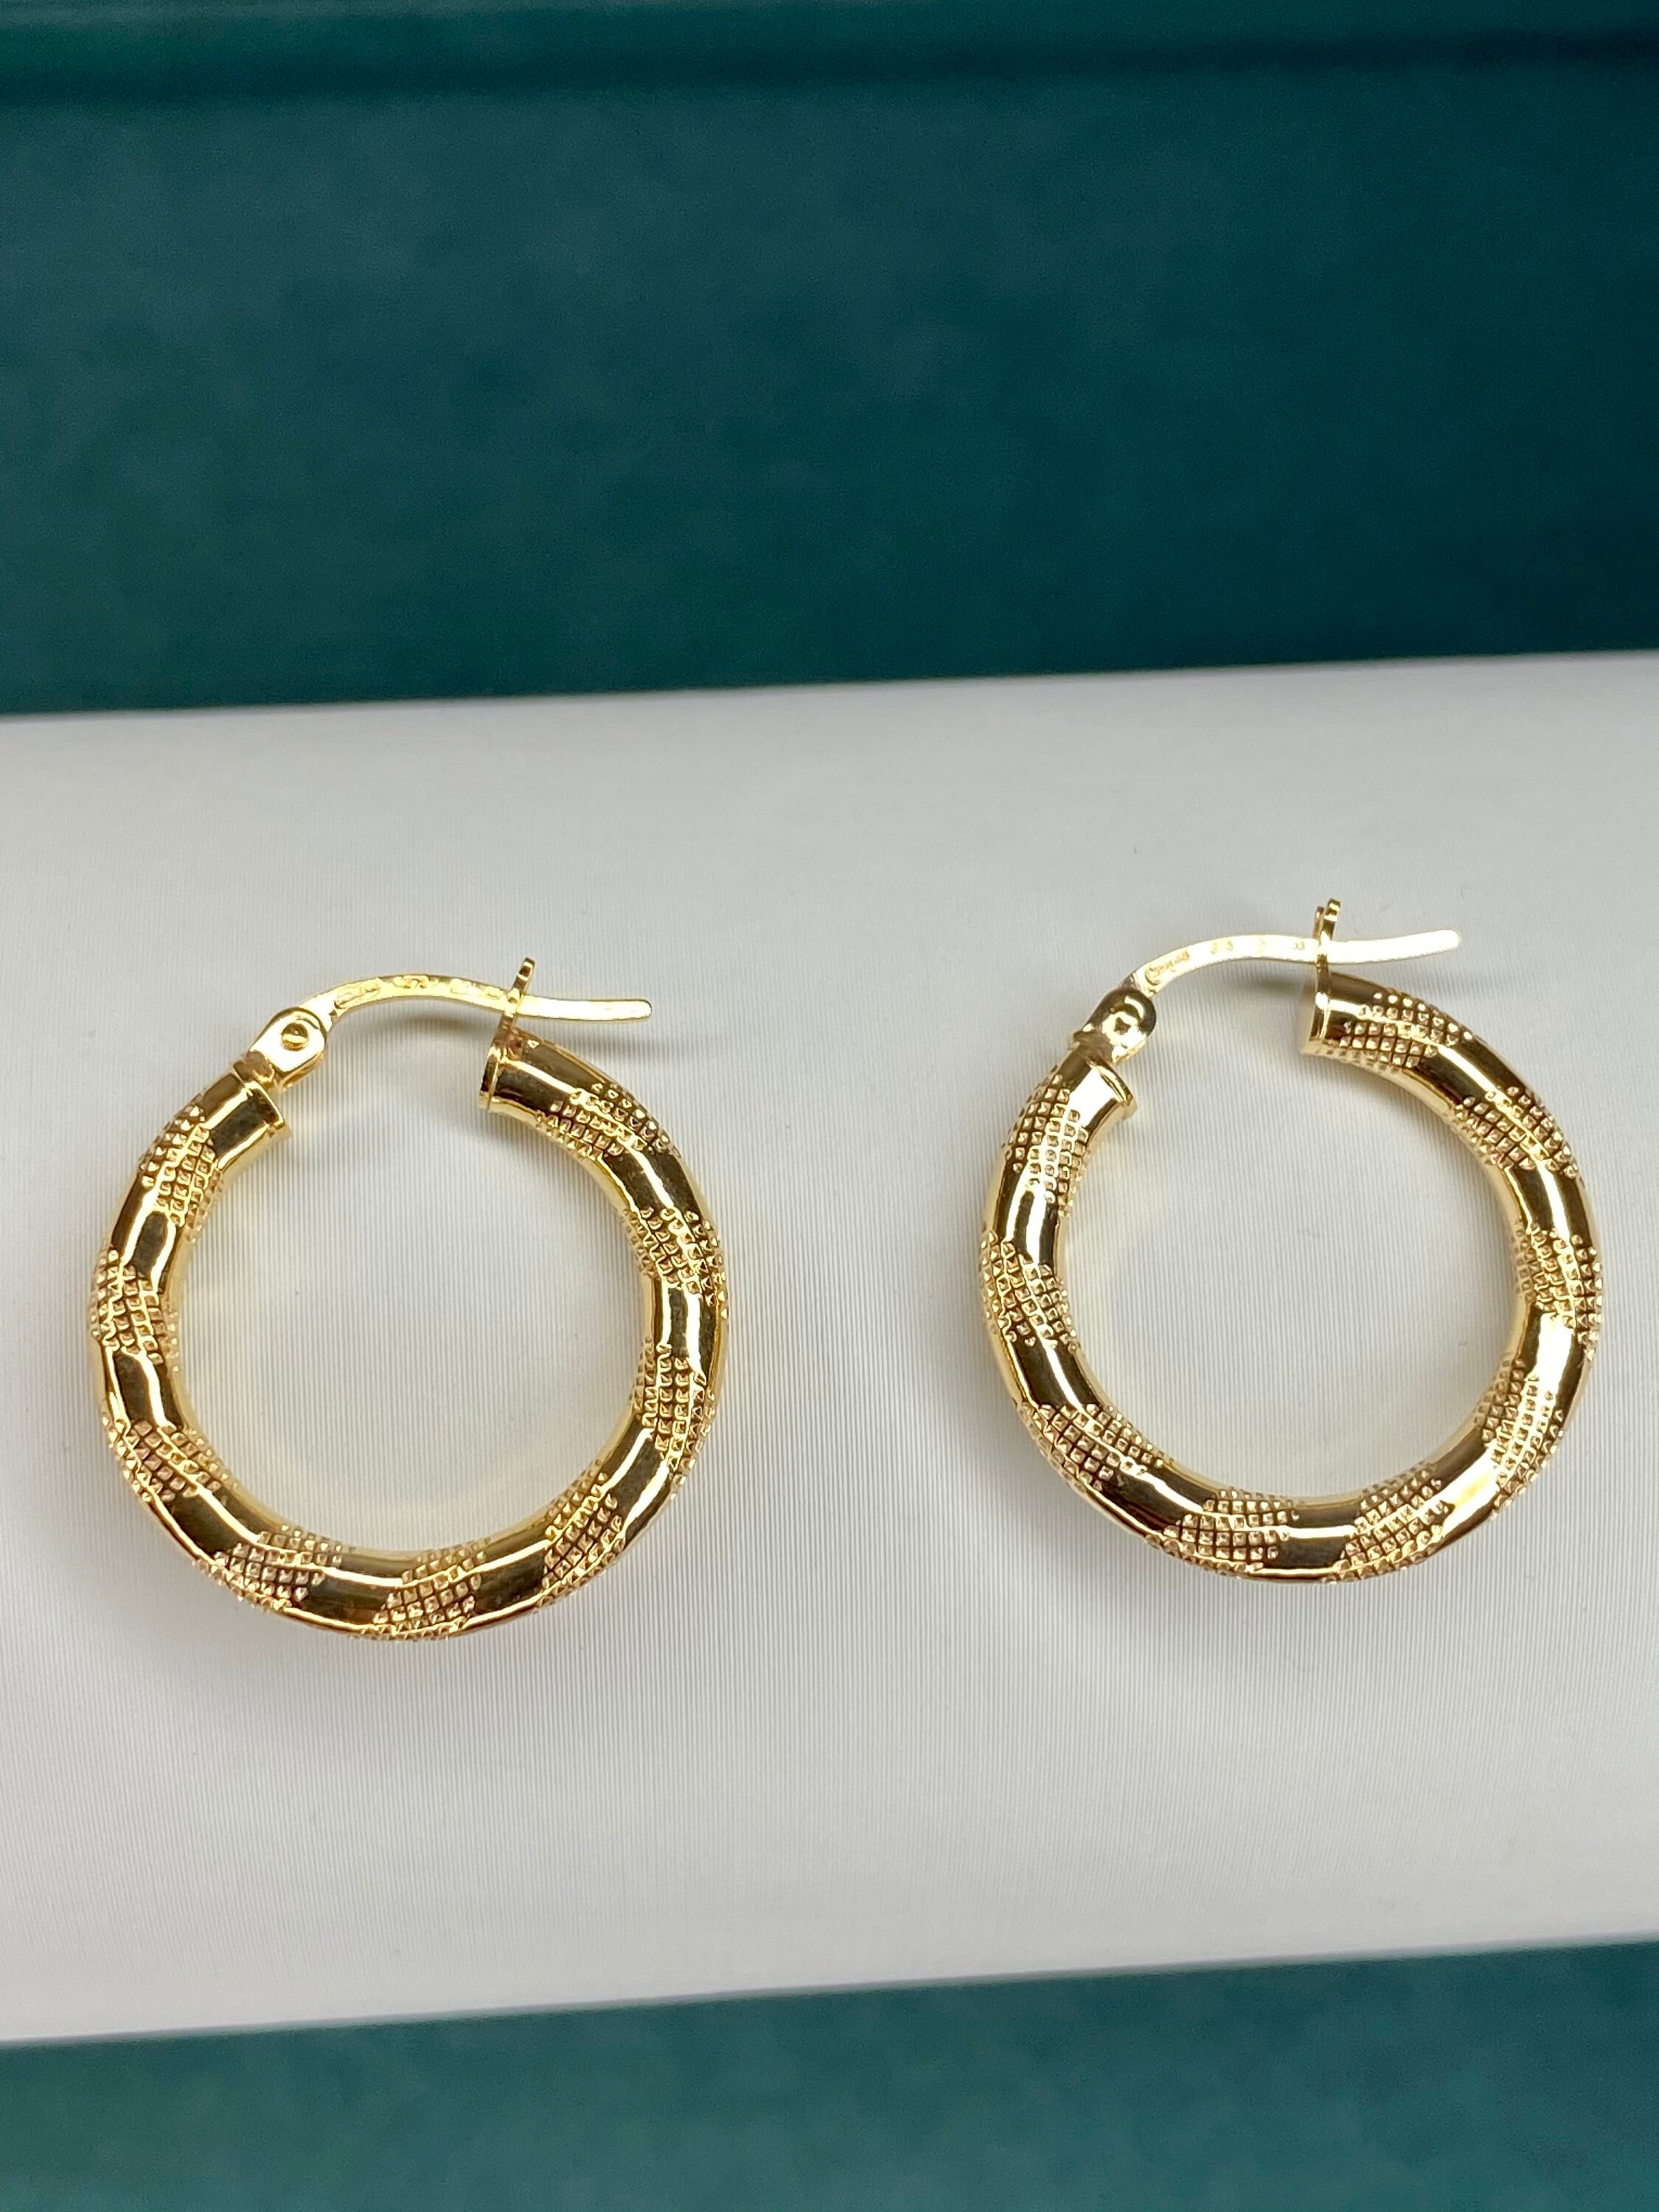 9ct solid Gold Expandable Baby Bangle Diamond Cut Jewellery Earrings Hoop Earrings 